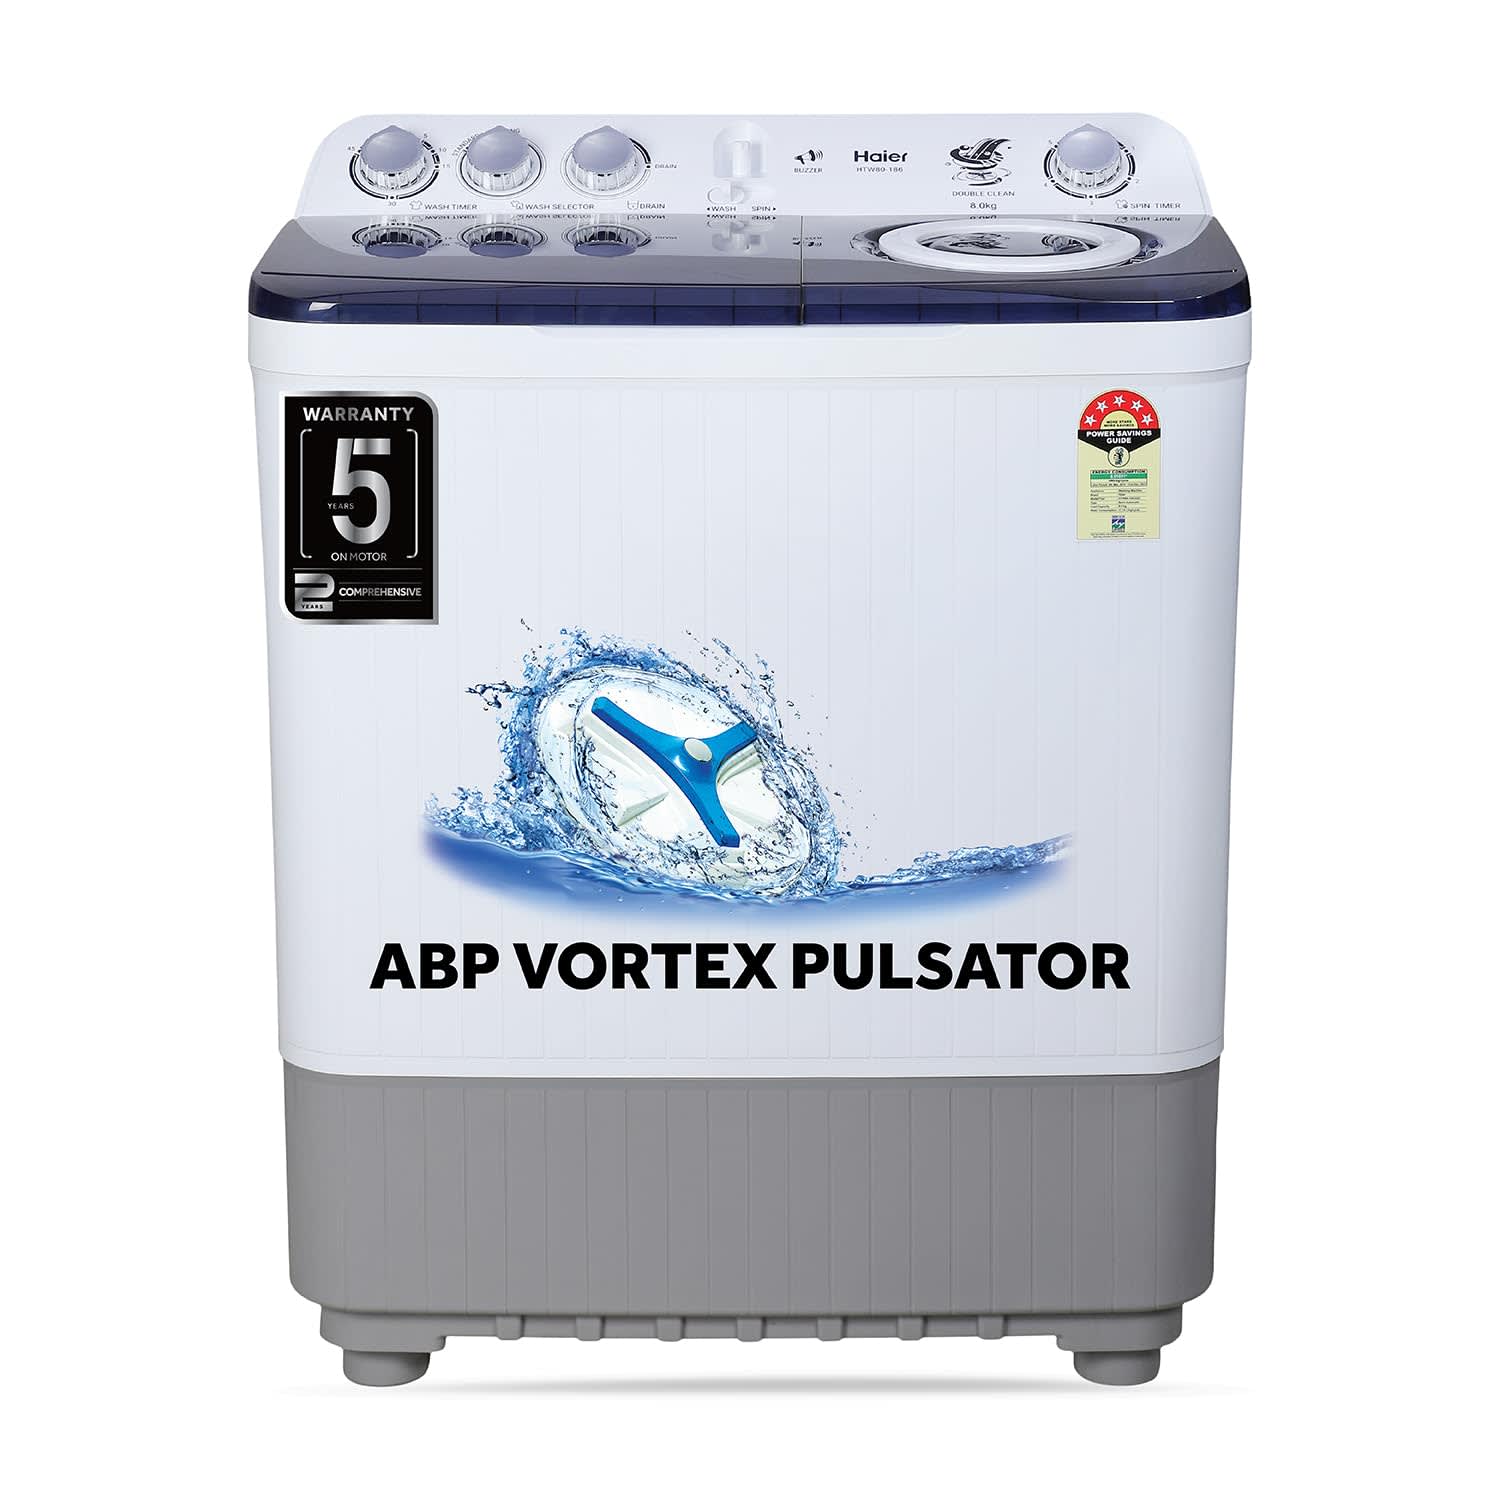 Haier 8 Kg 5 Star Voltex Pulsator Semi Automatic Top Load Washing Machine